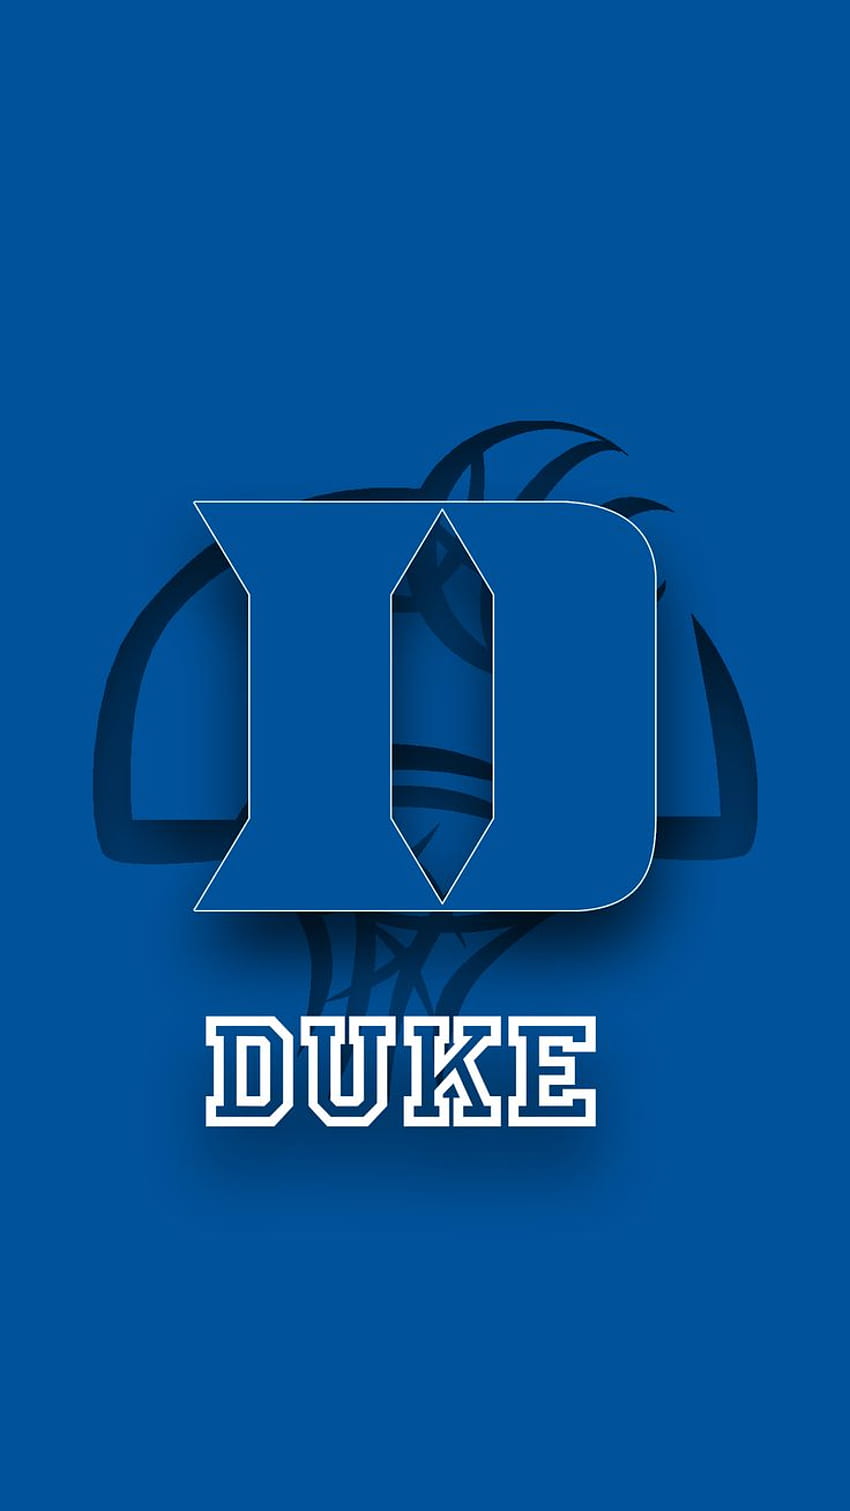 Duke Basketball Wallpaper  iXpap  Duke basketball Duke blue devils  basketball Basketball wallpaper